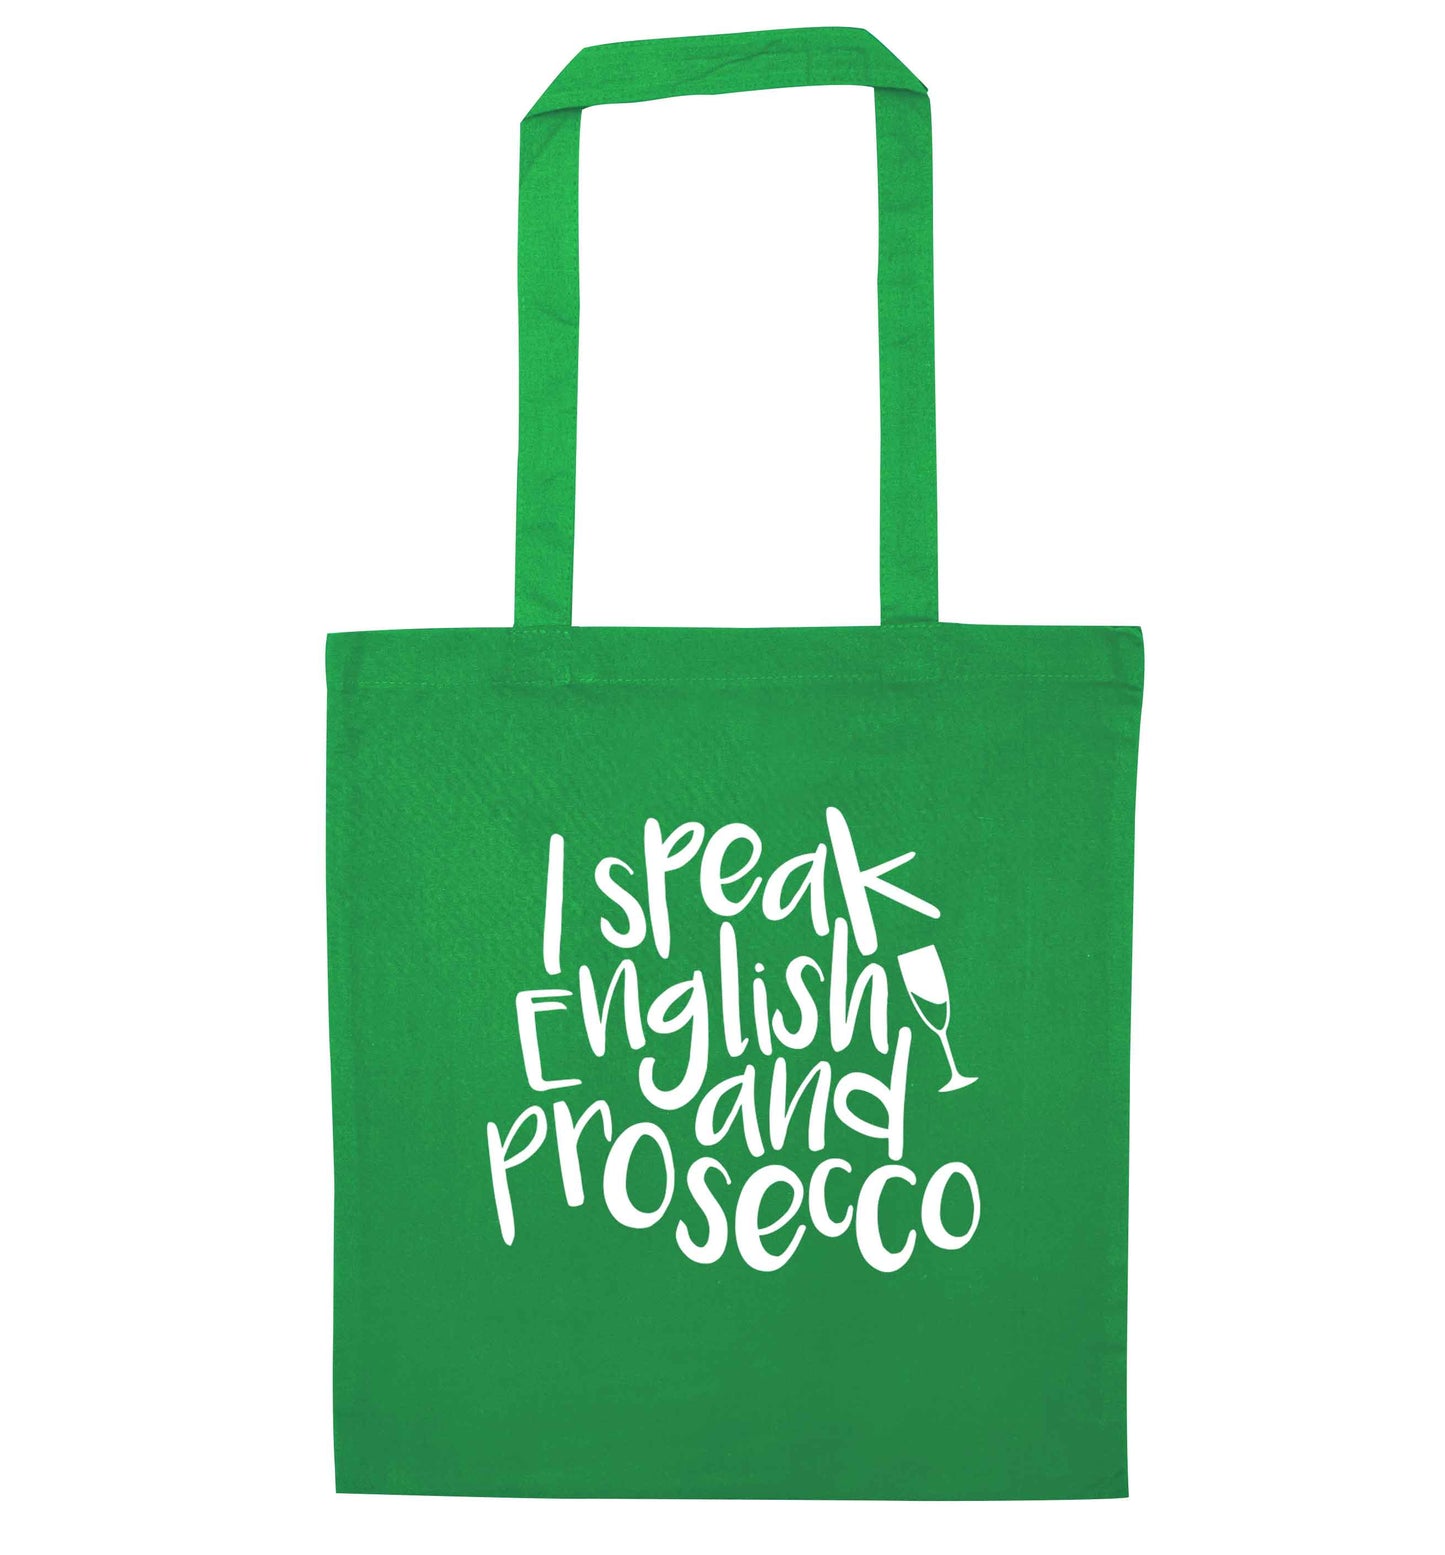 I speak English and prosecco green tote bag